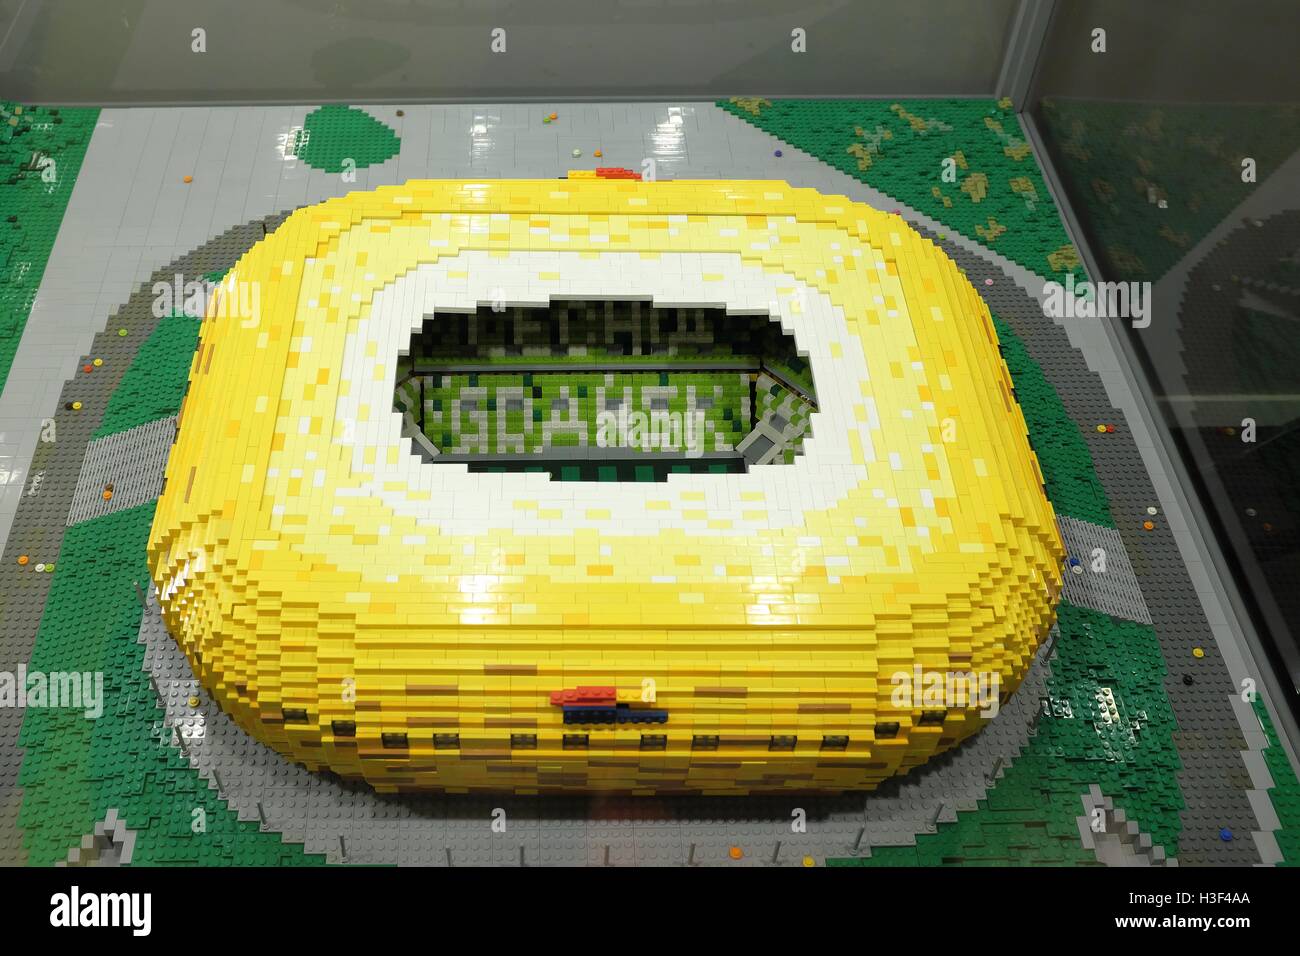 Lego stadium hi-res stock photography and images - Alamy